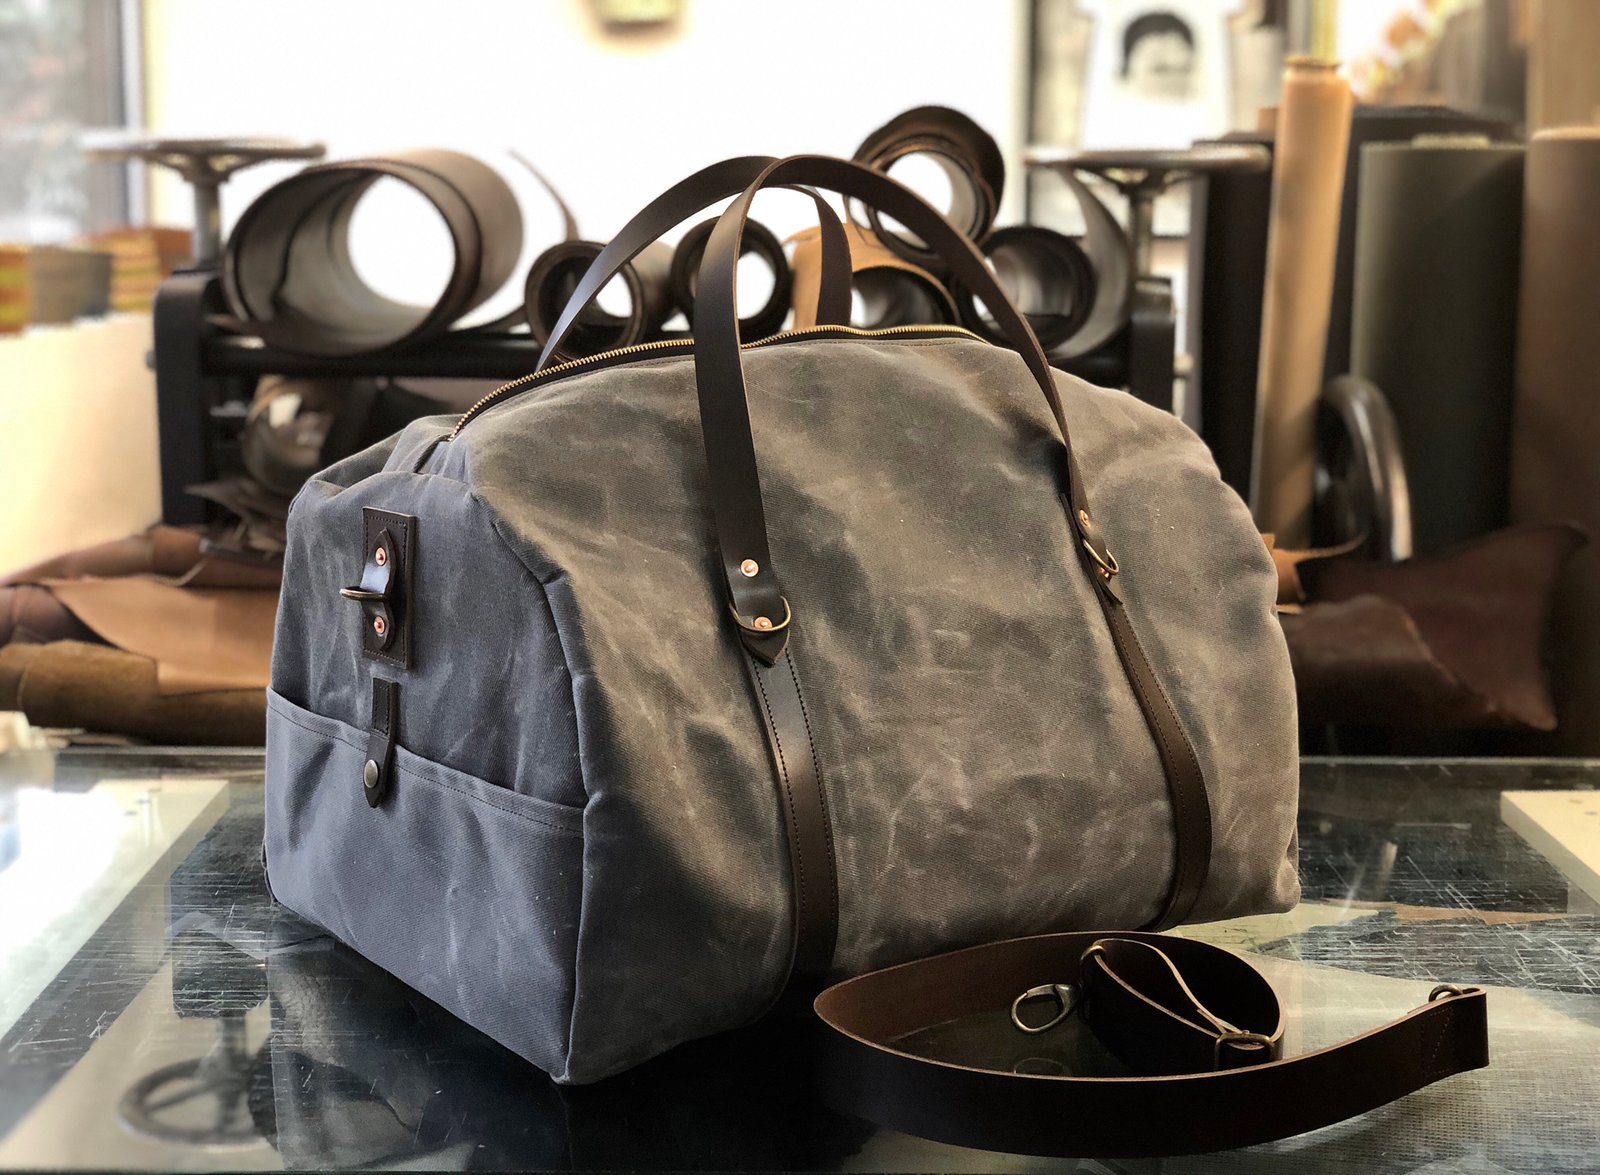 Travel bag mocha and chocolate - Andrea - The Socialite Family